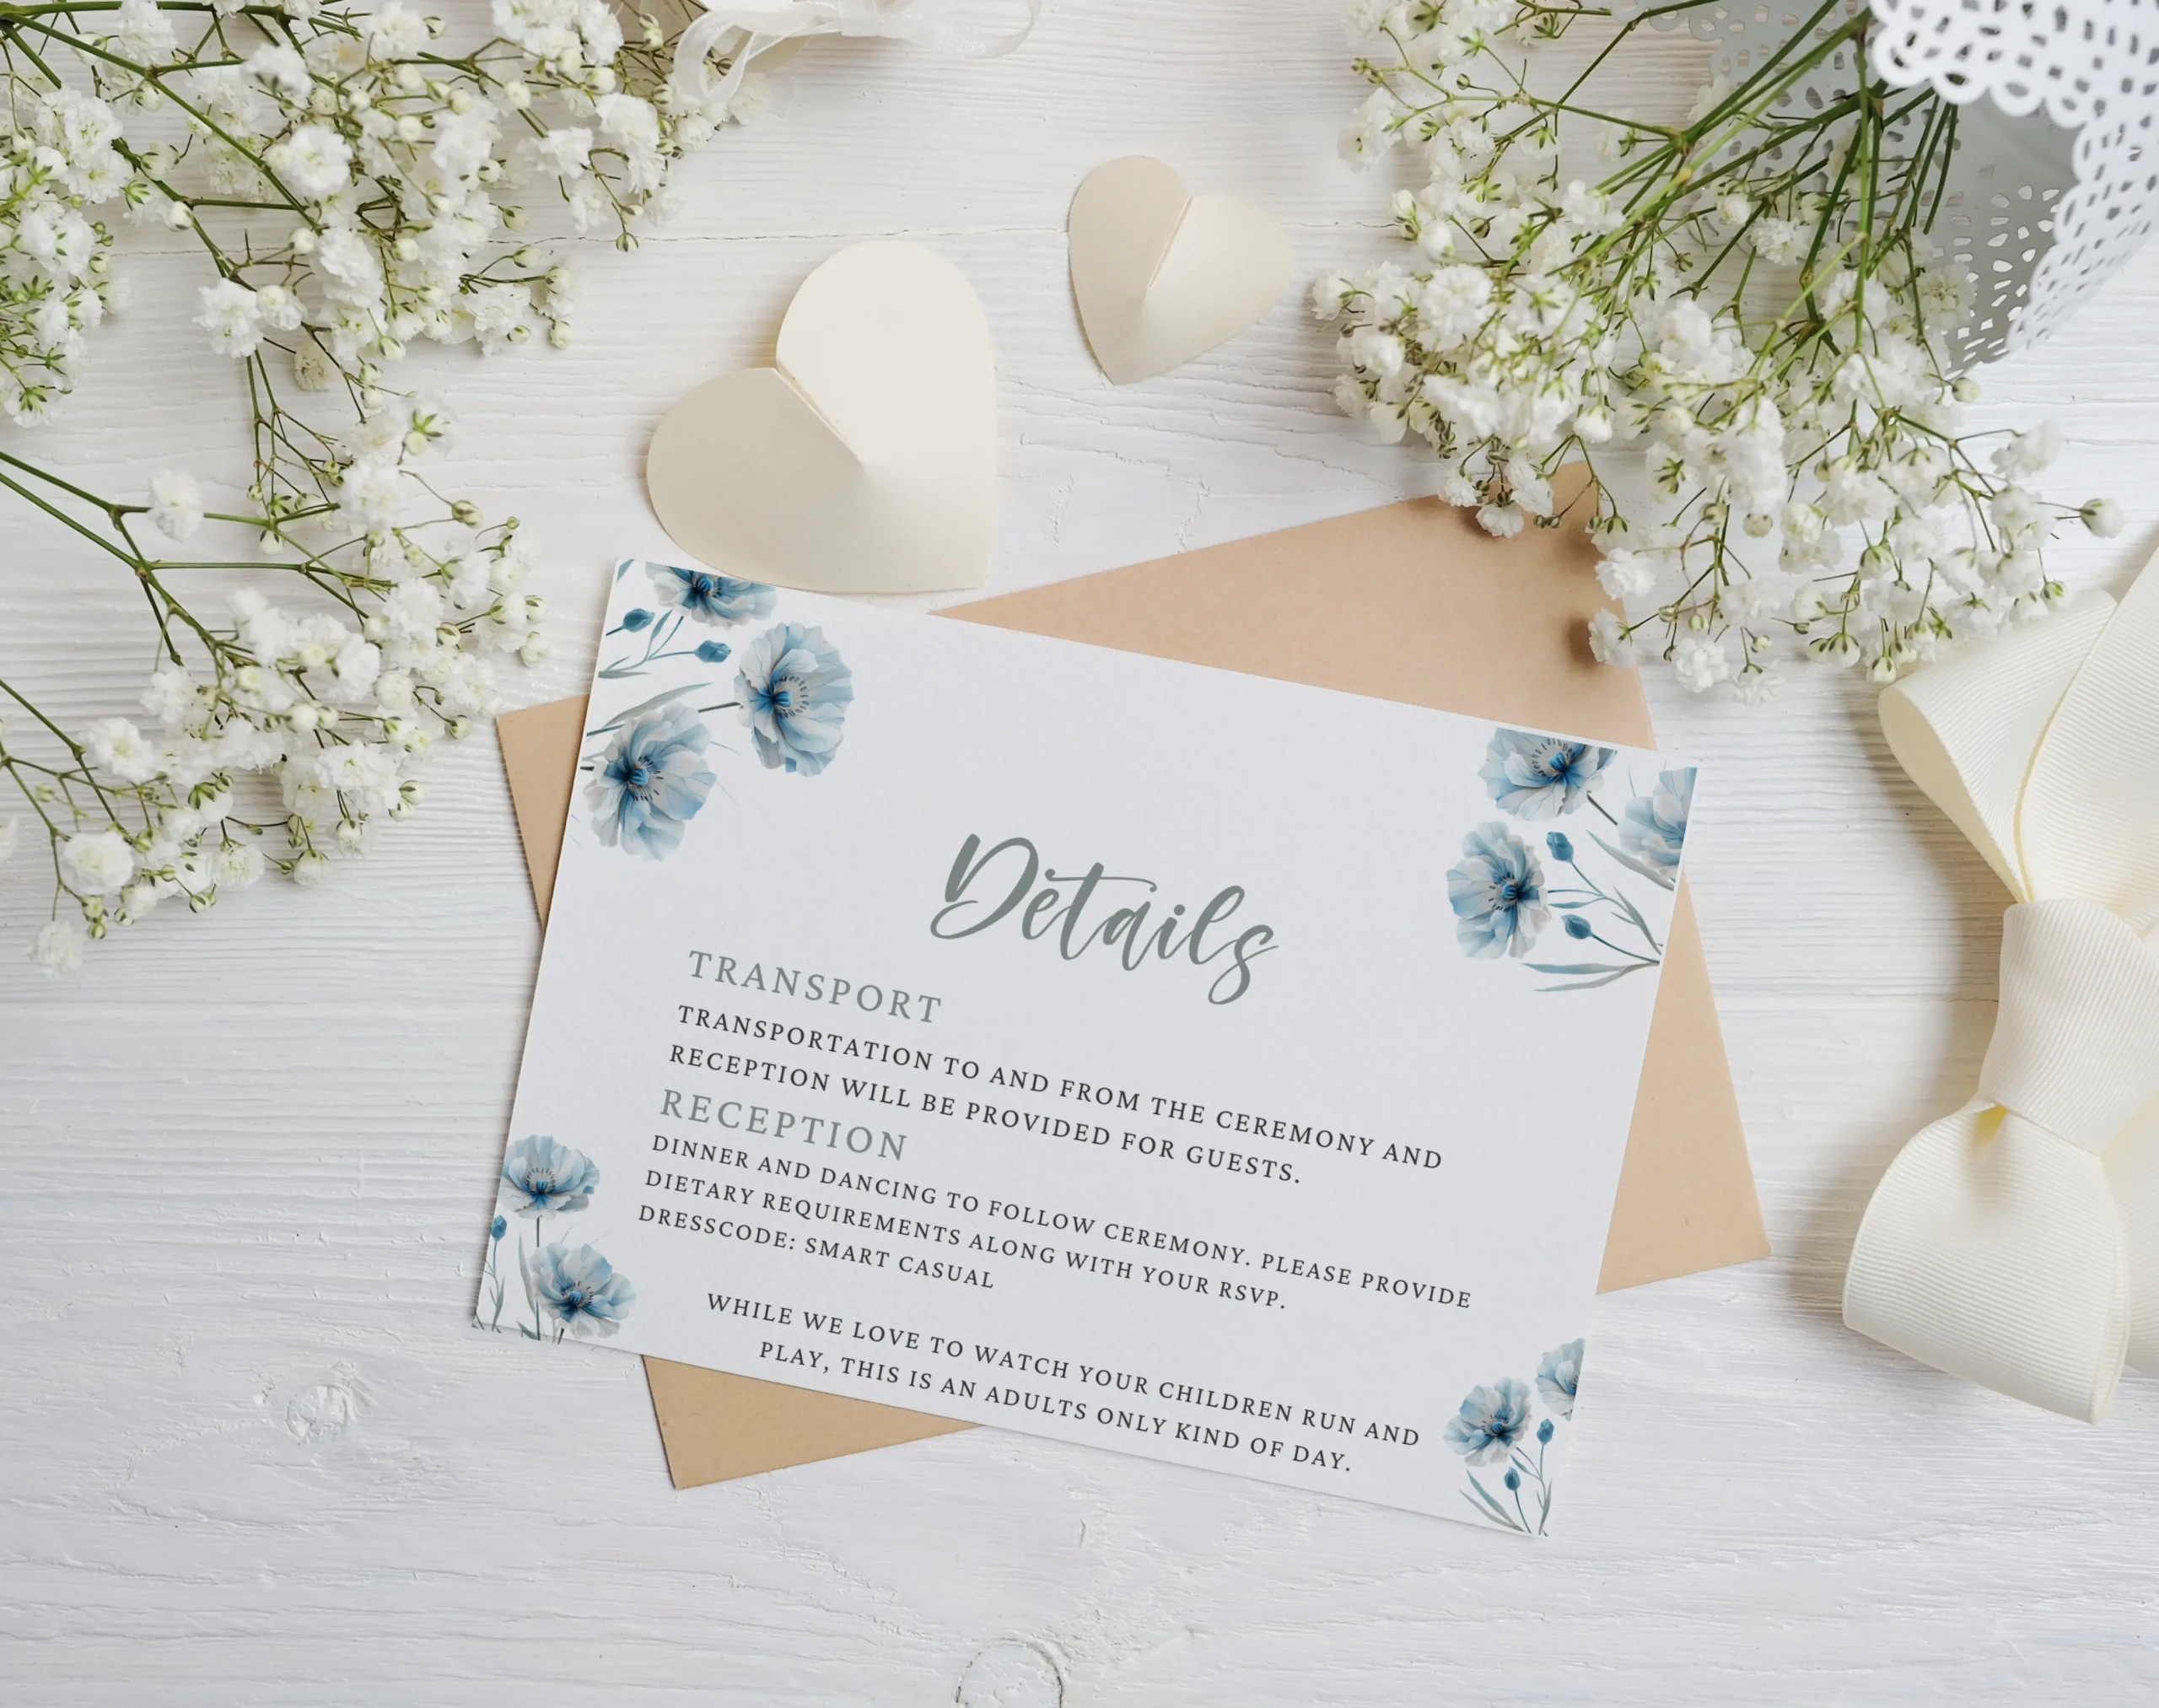 Wedding Details Information Card Template